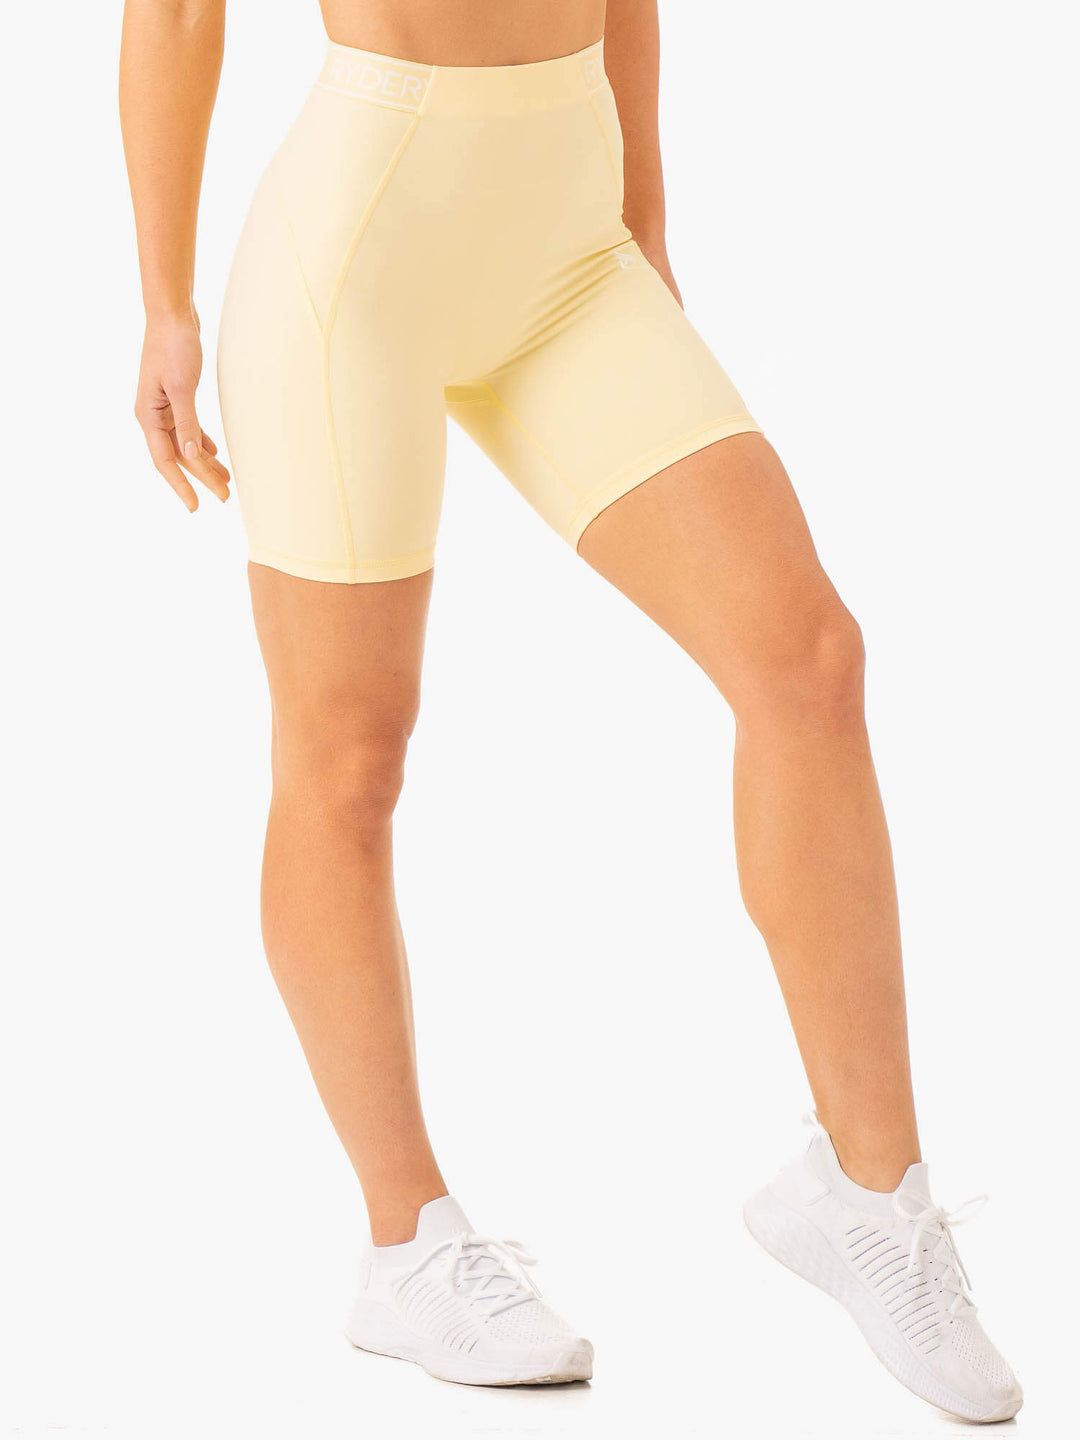 Level Up High Waisted Scrunch Shorts - Butter Clothing Ryderwear 